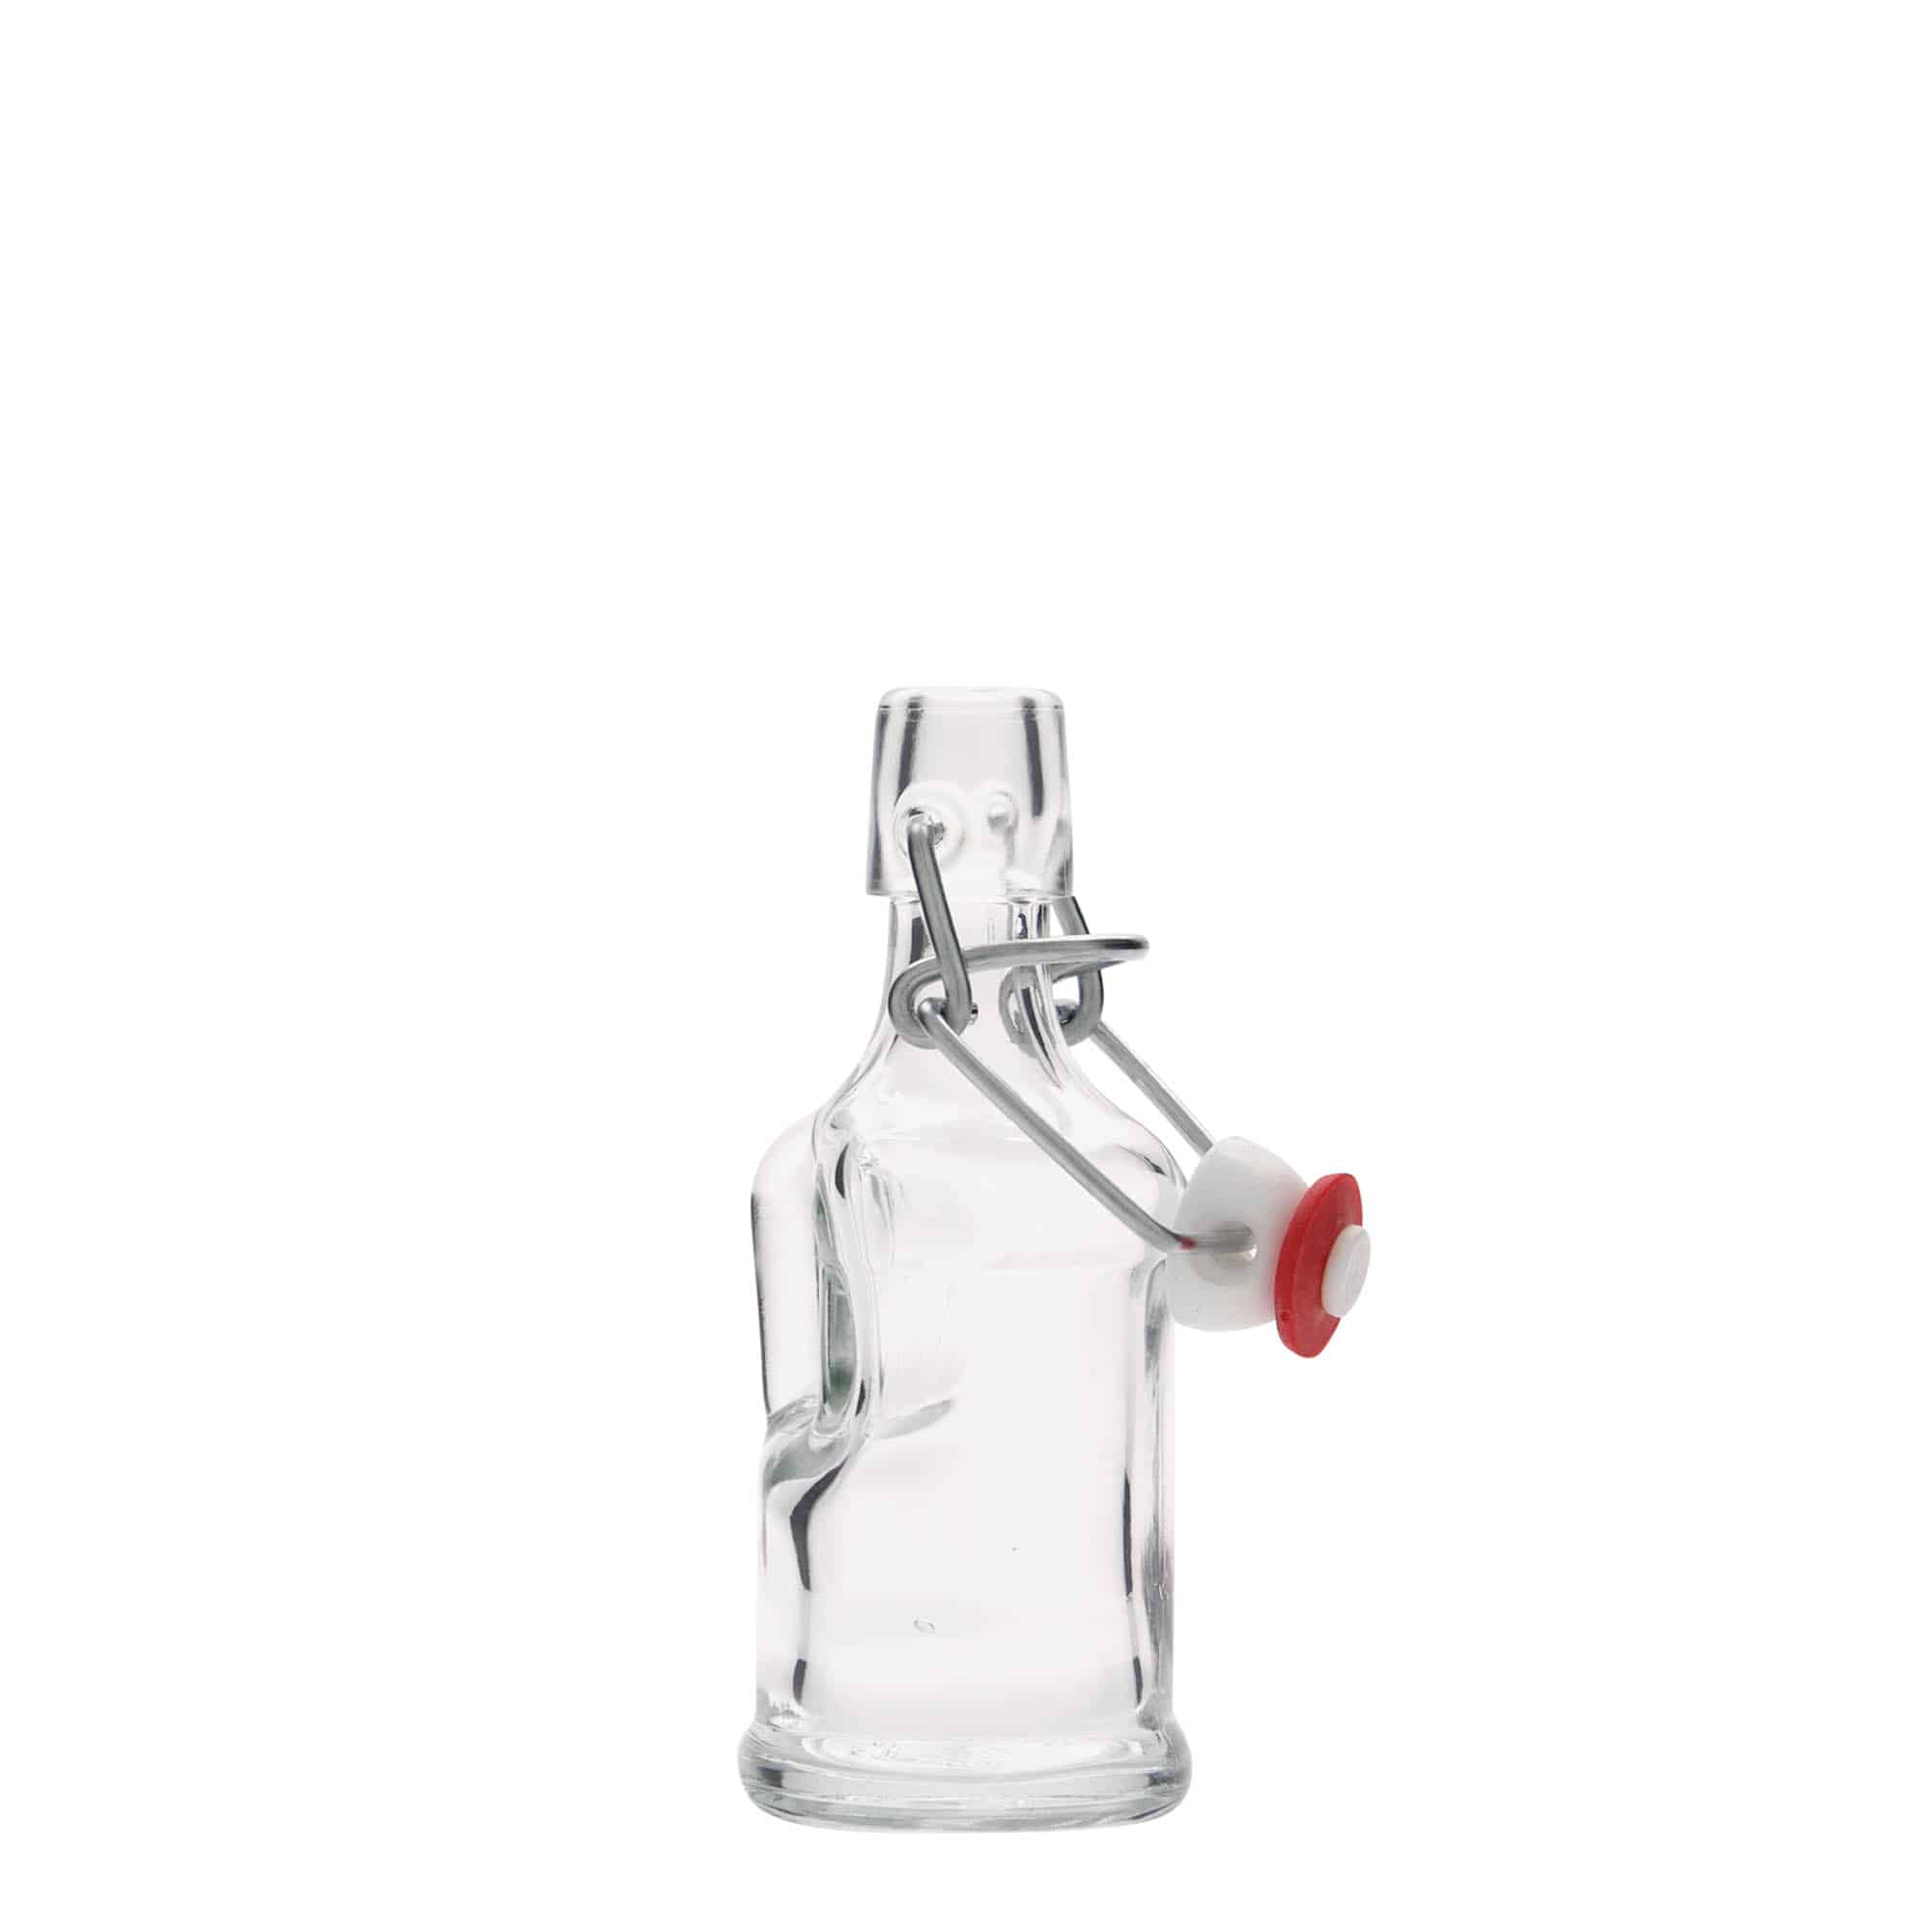 40 ml glass bottle 'Classica', closure: swing top